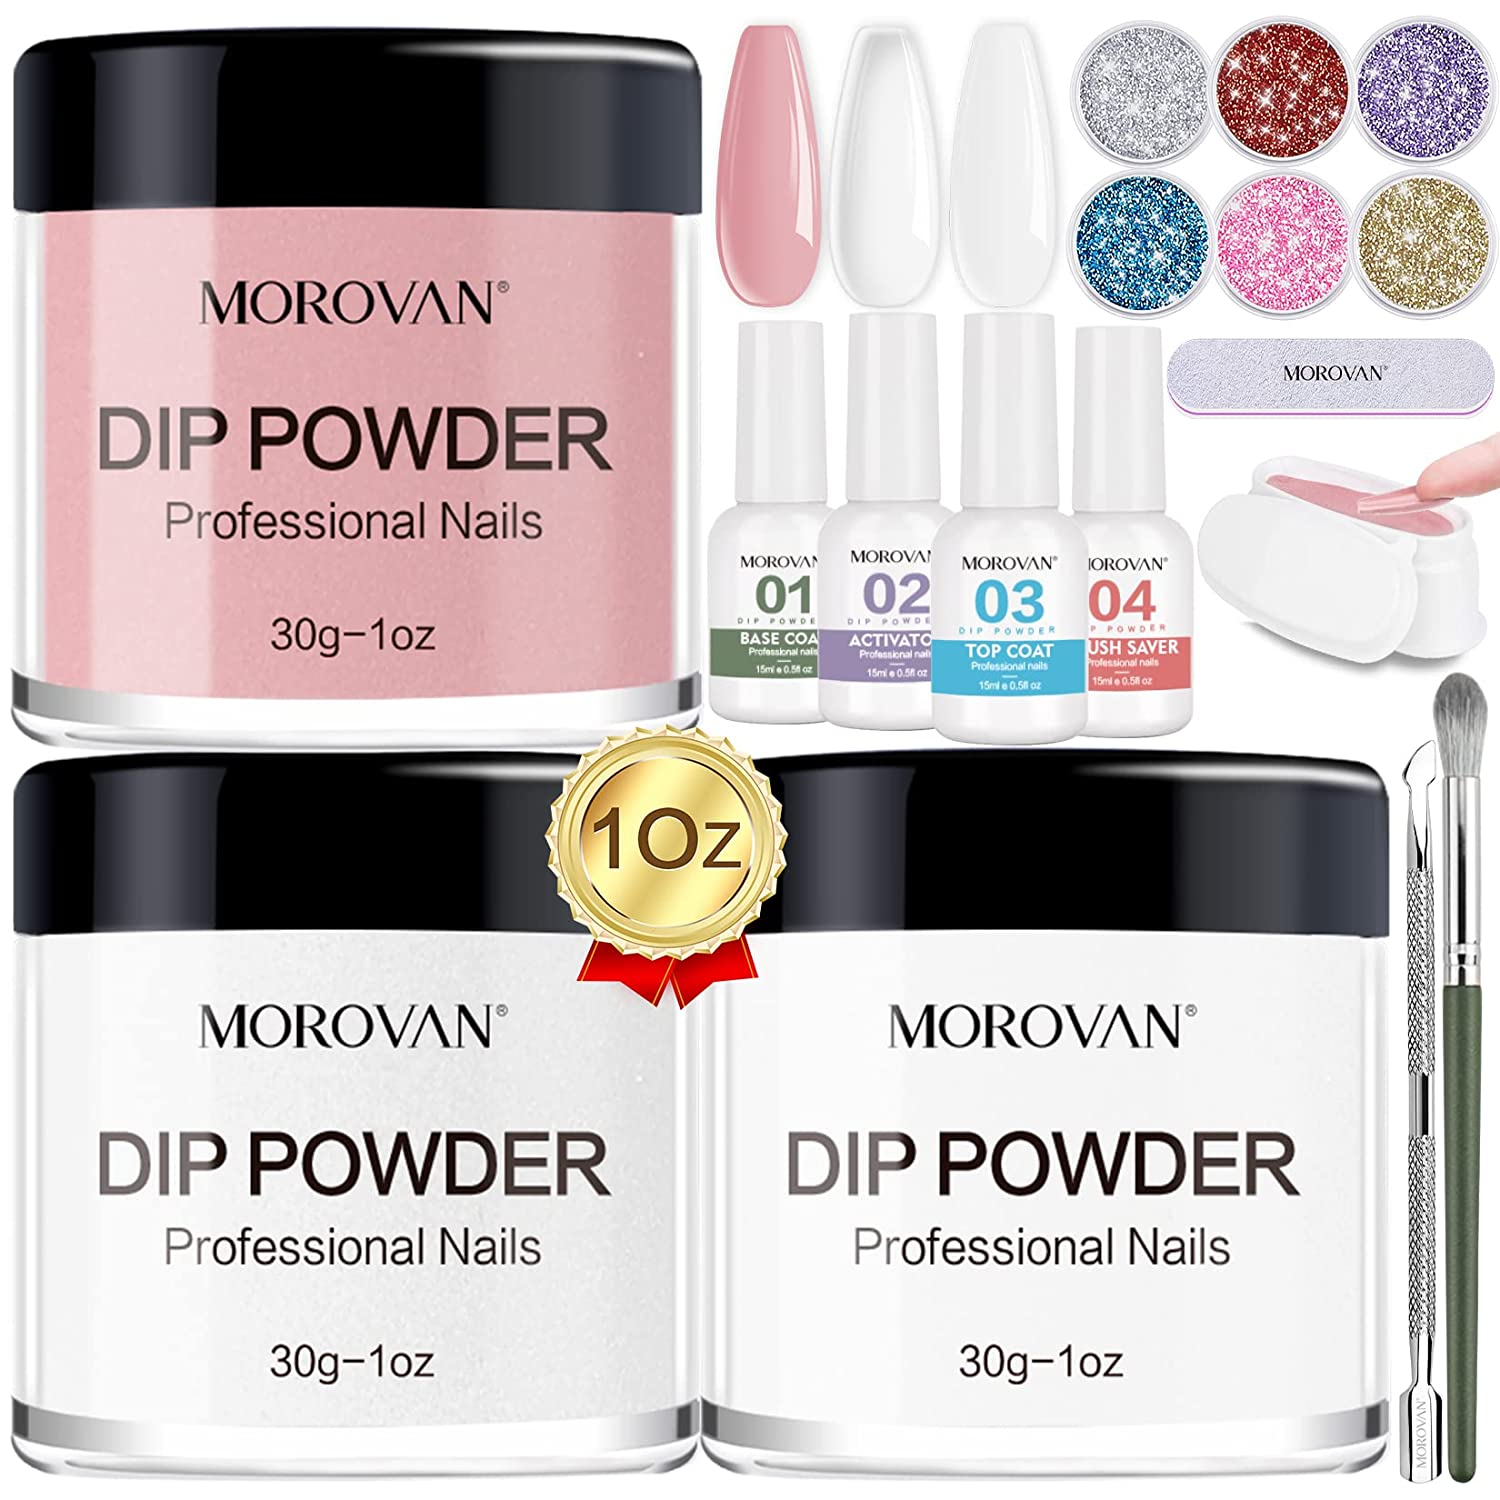 Gorgeous Dip powder - Enjoy Your Moment | MOROVAN